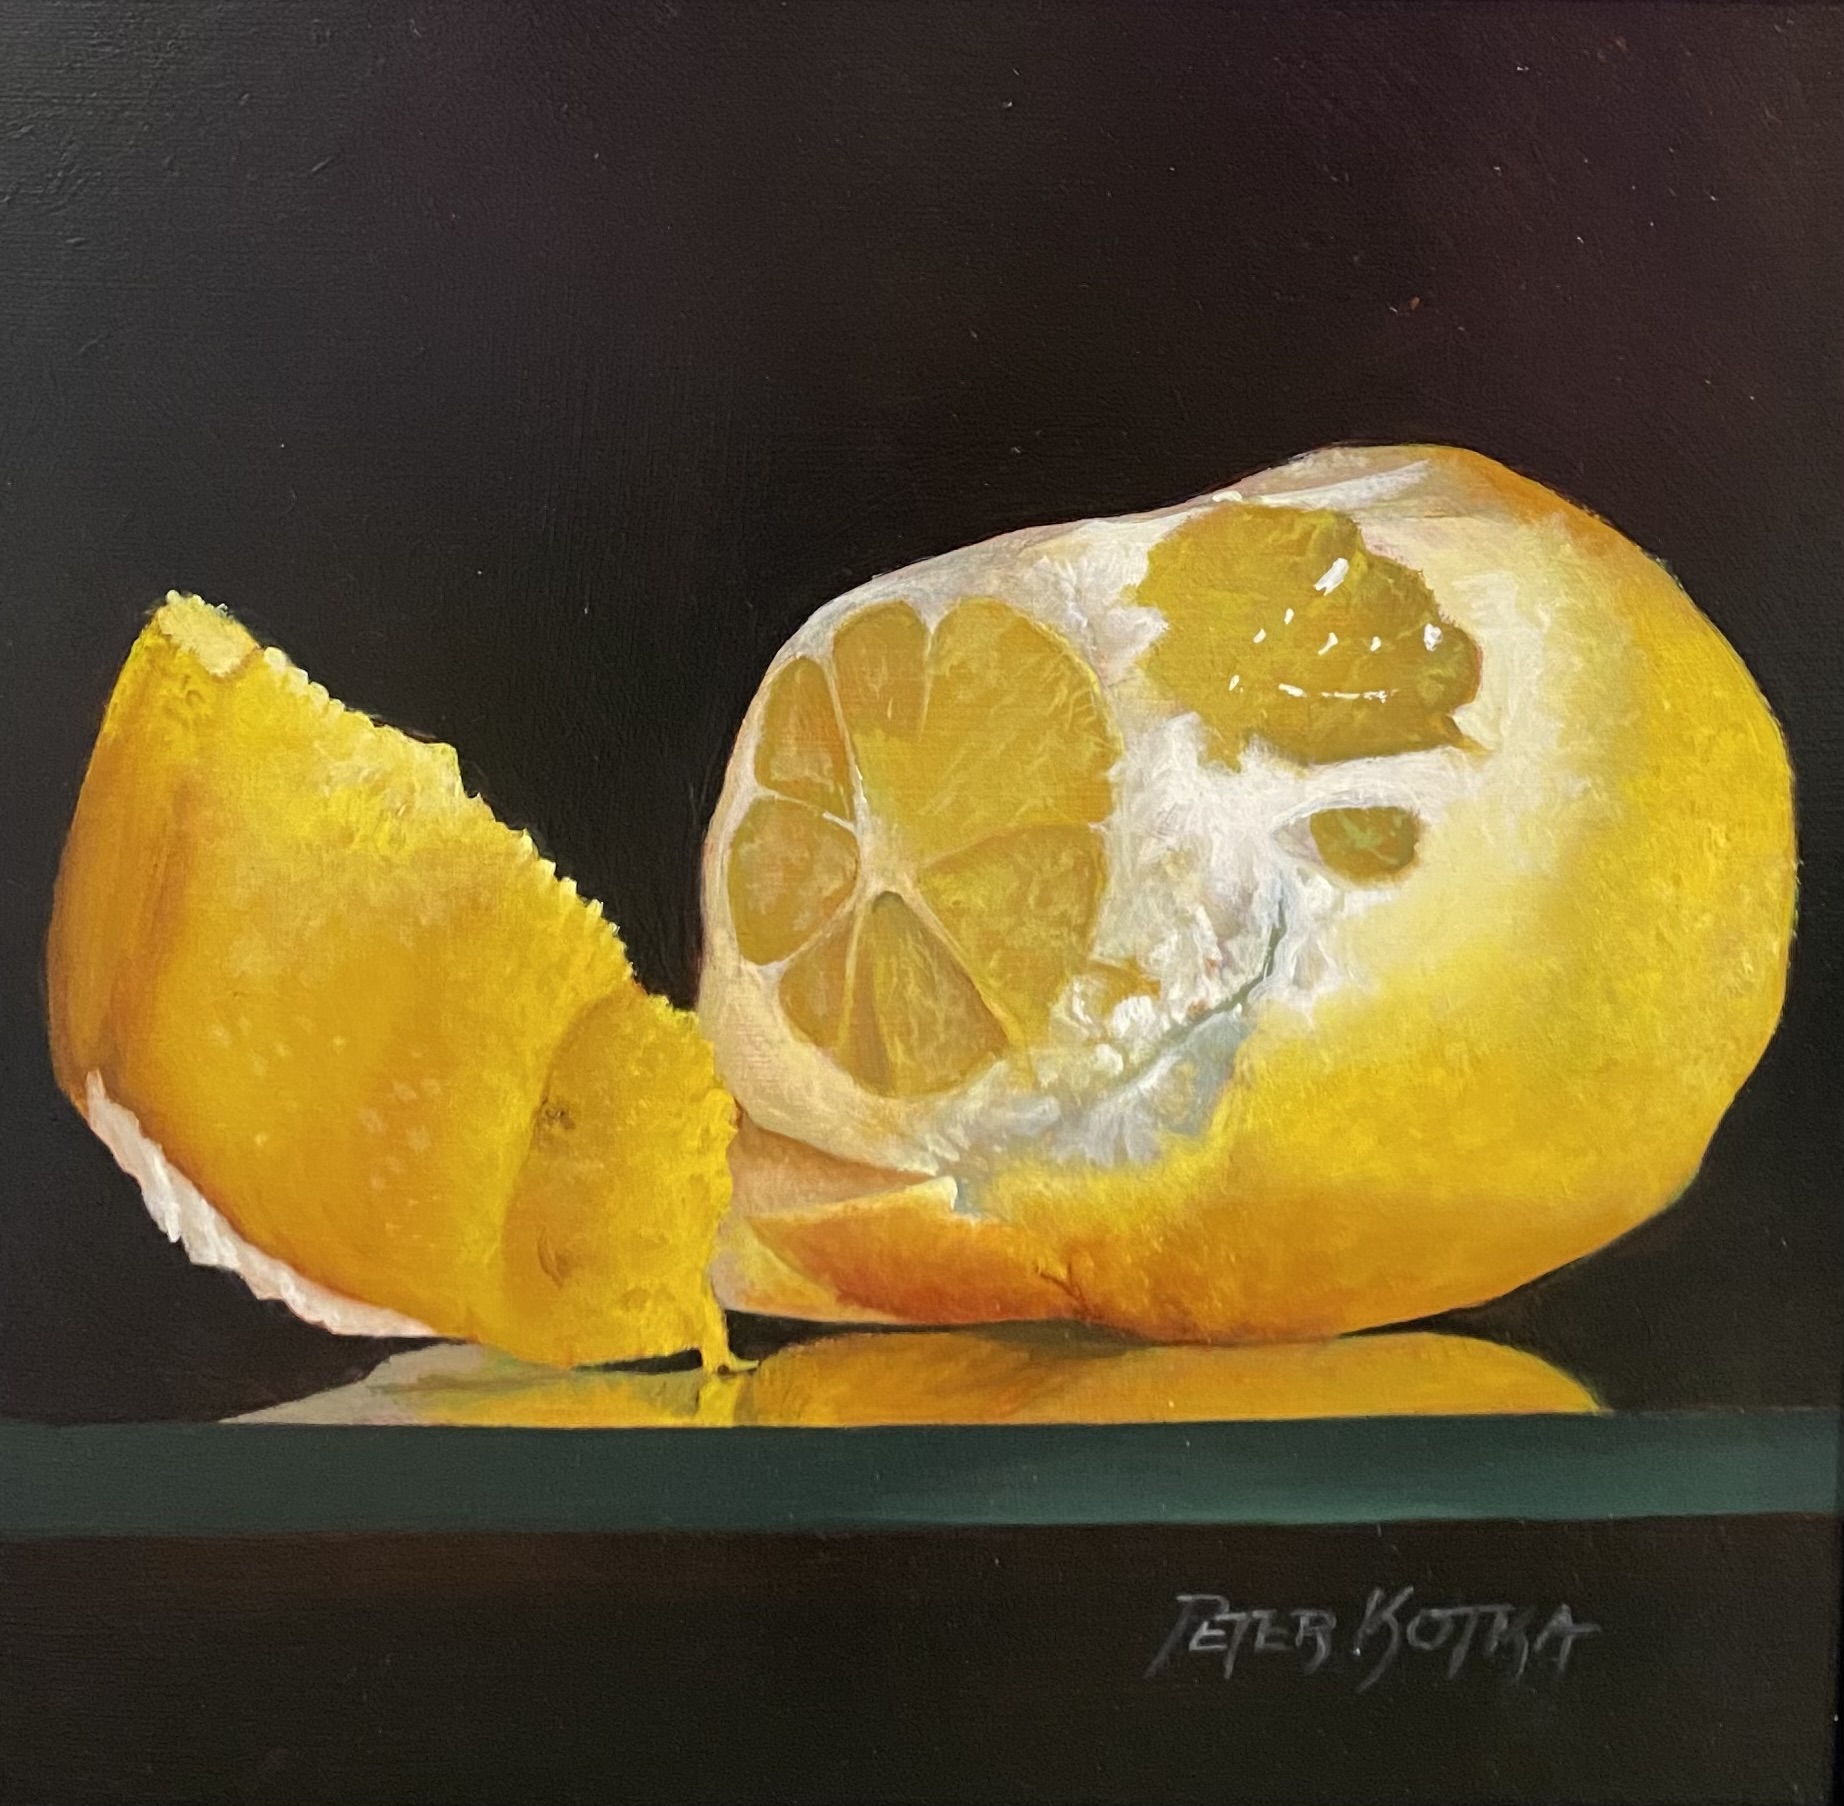 Lemon Peel is an original oil painting on panel by the talented artist Peter Kotka